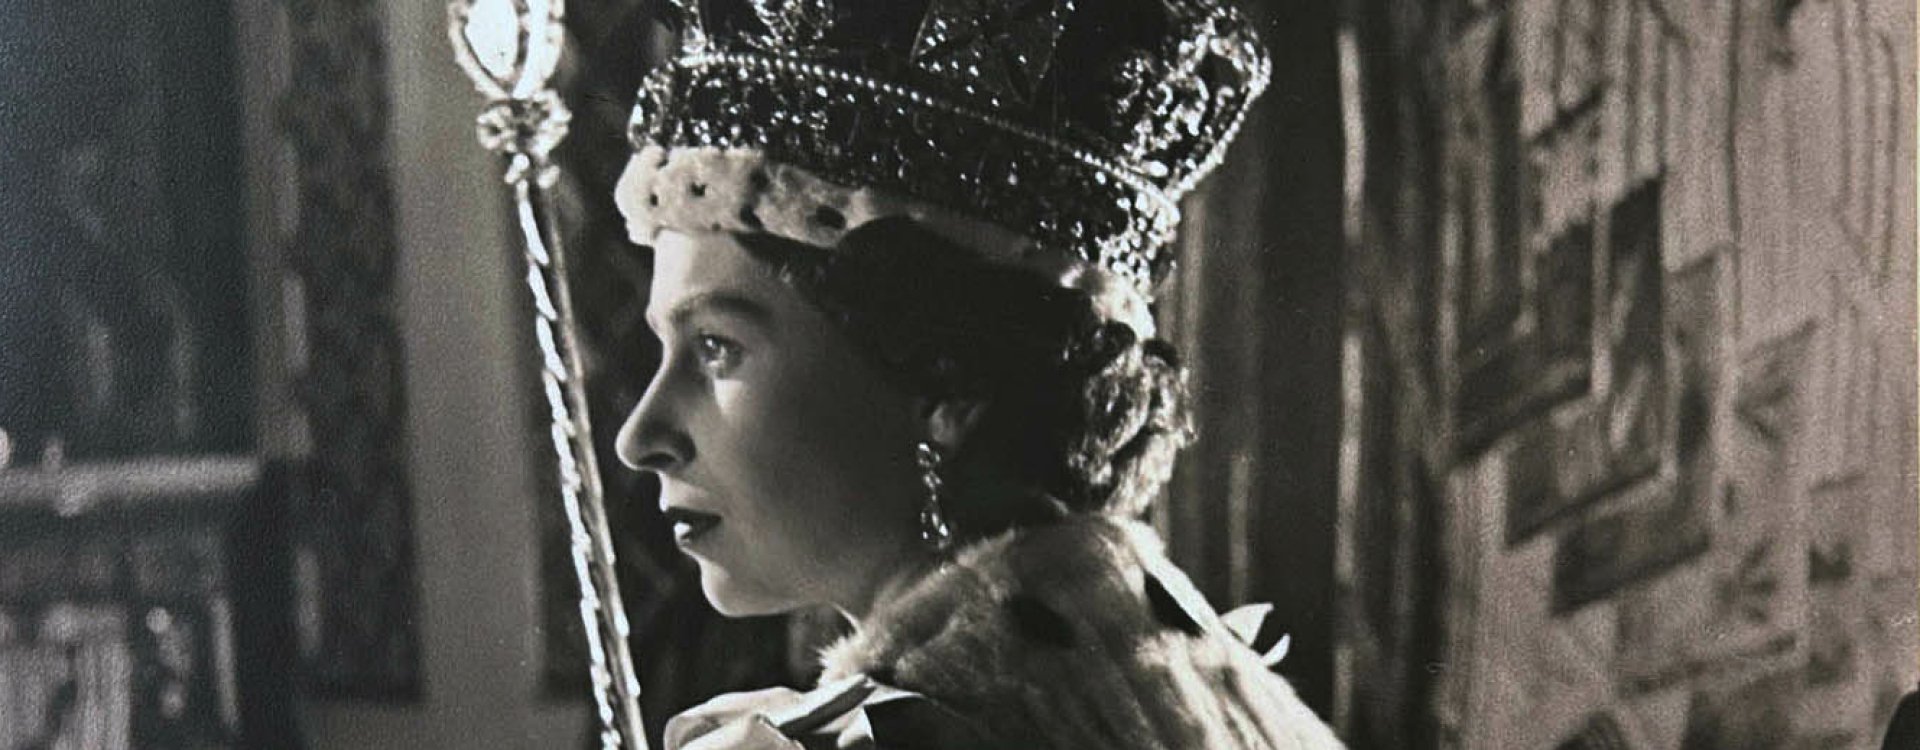 Queen Elizabeth II on Coronation Day by Cecil Beaton